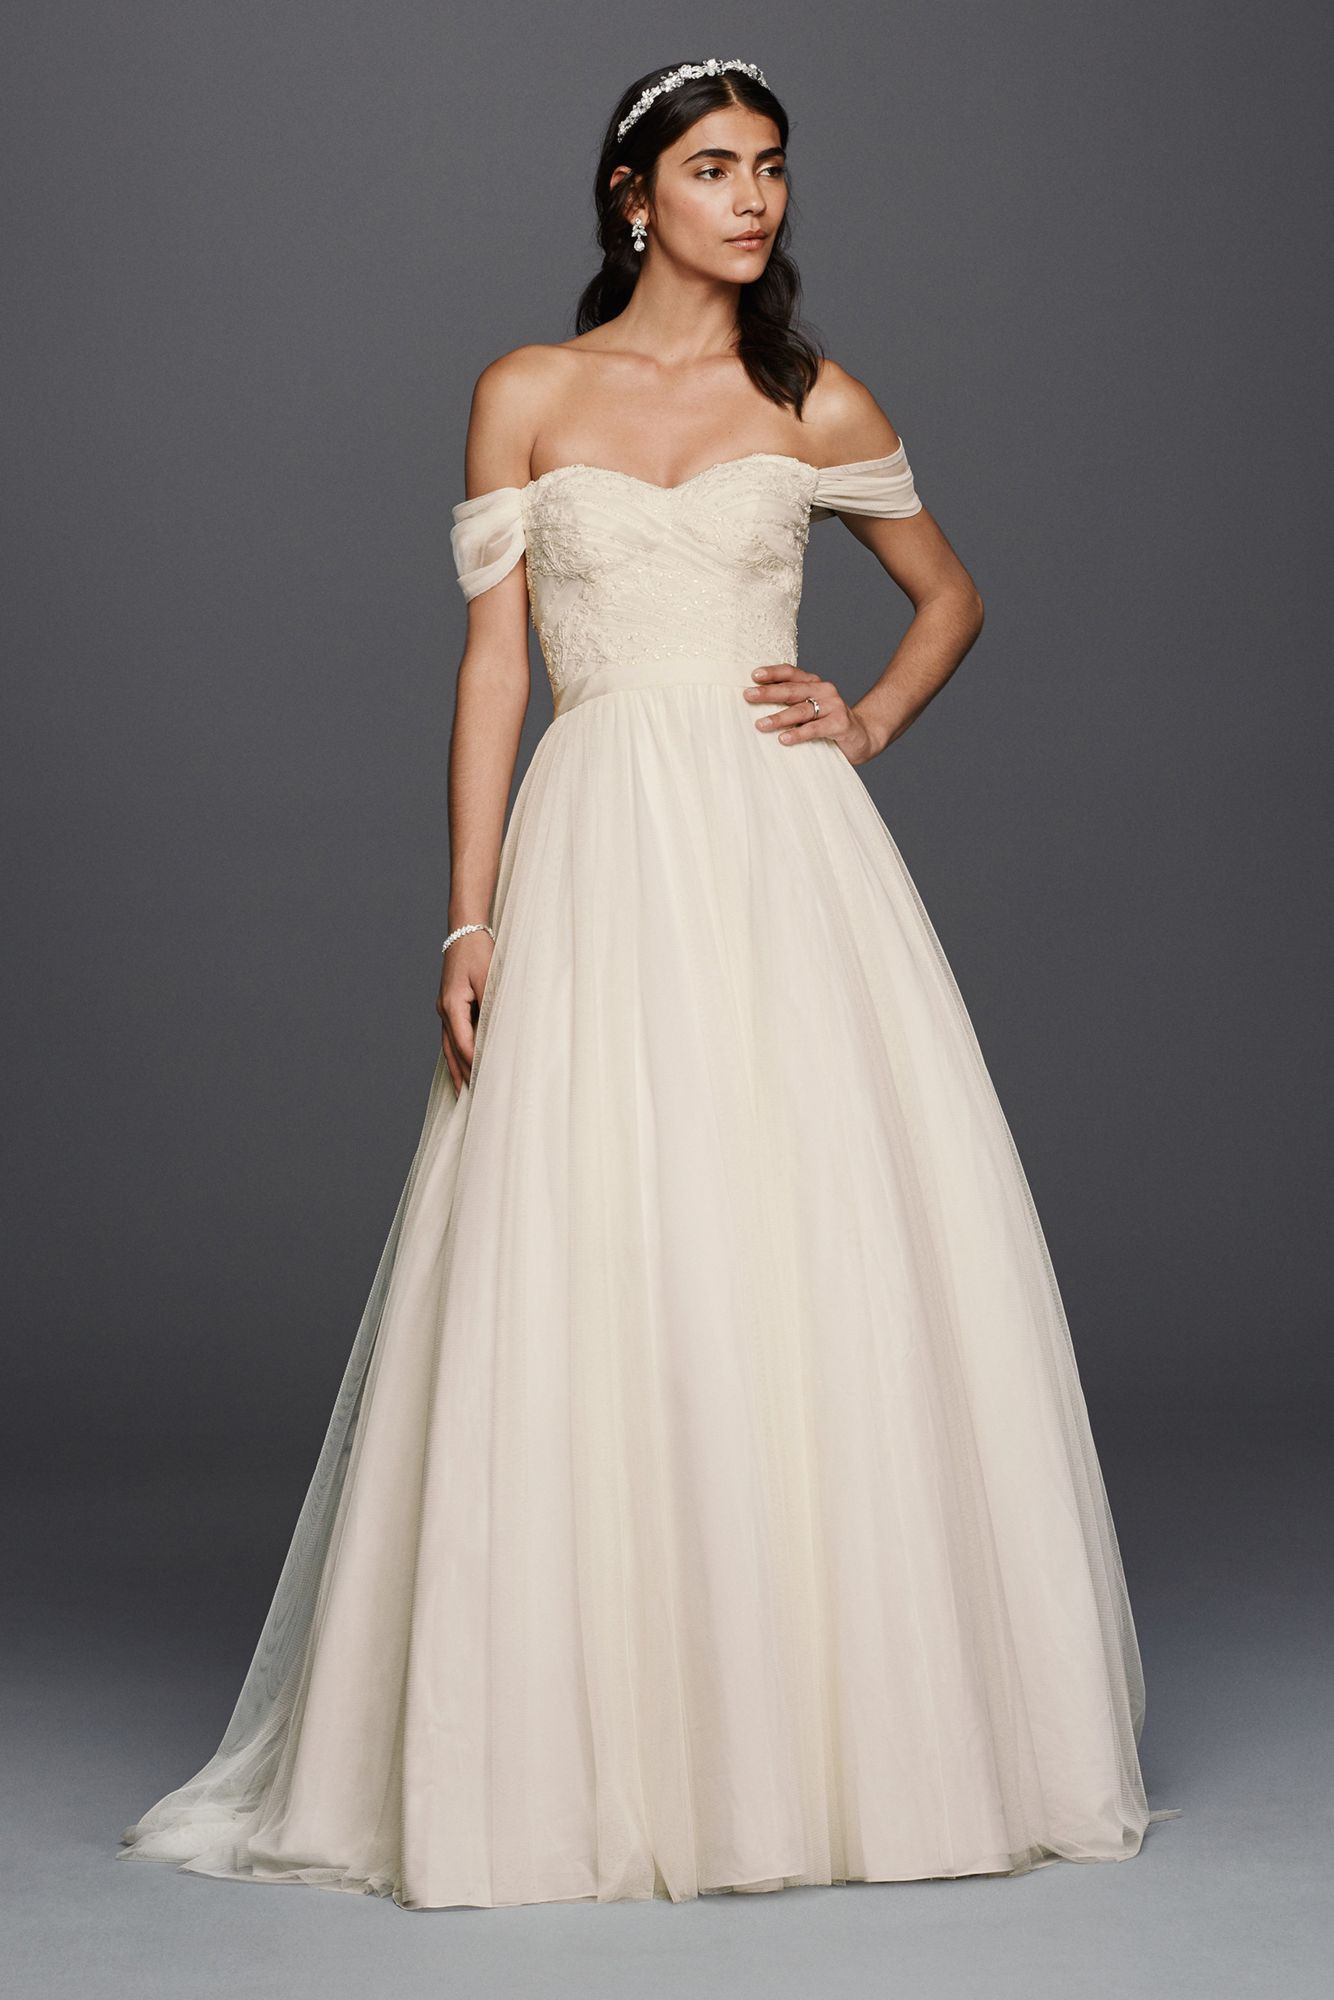 Sweetheart Wedding Gowns
 Tulle Beaded Lace Sweetheart Wedding Dress Style WG3785